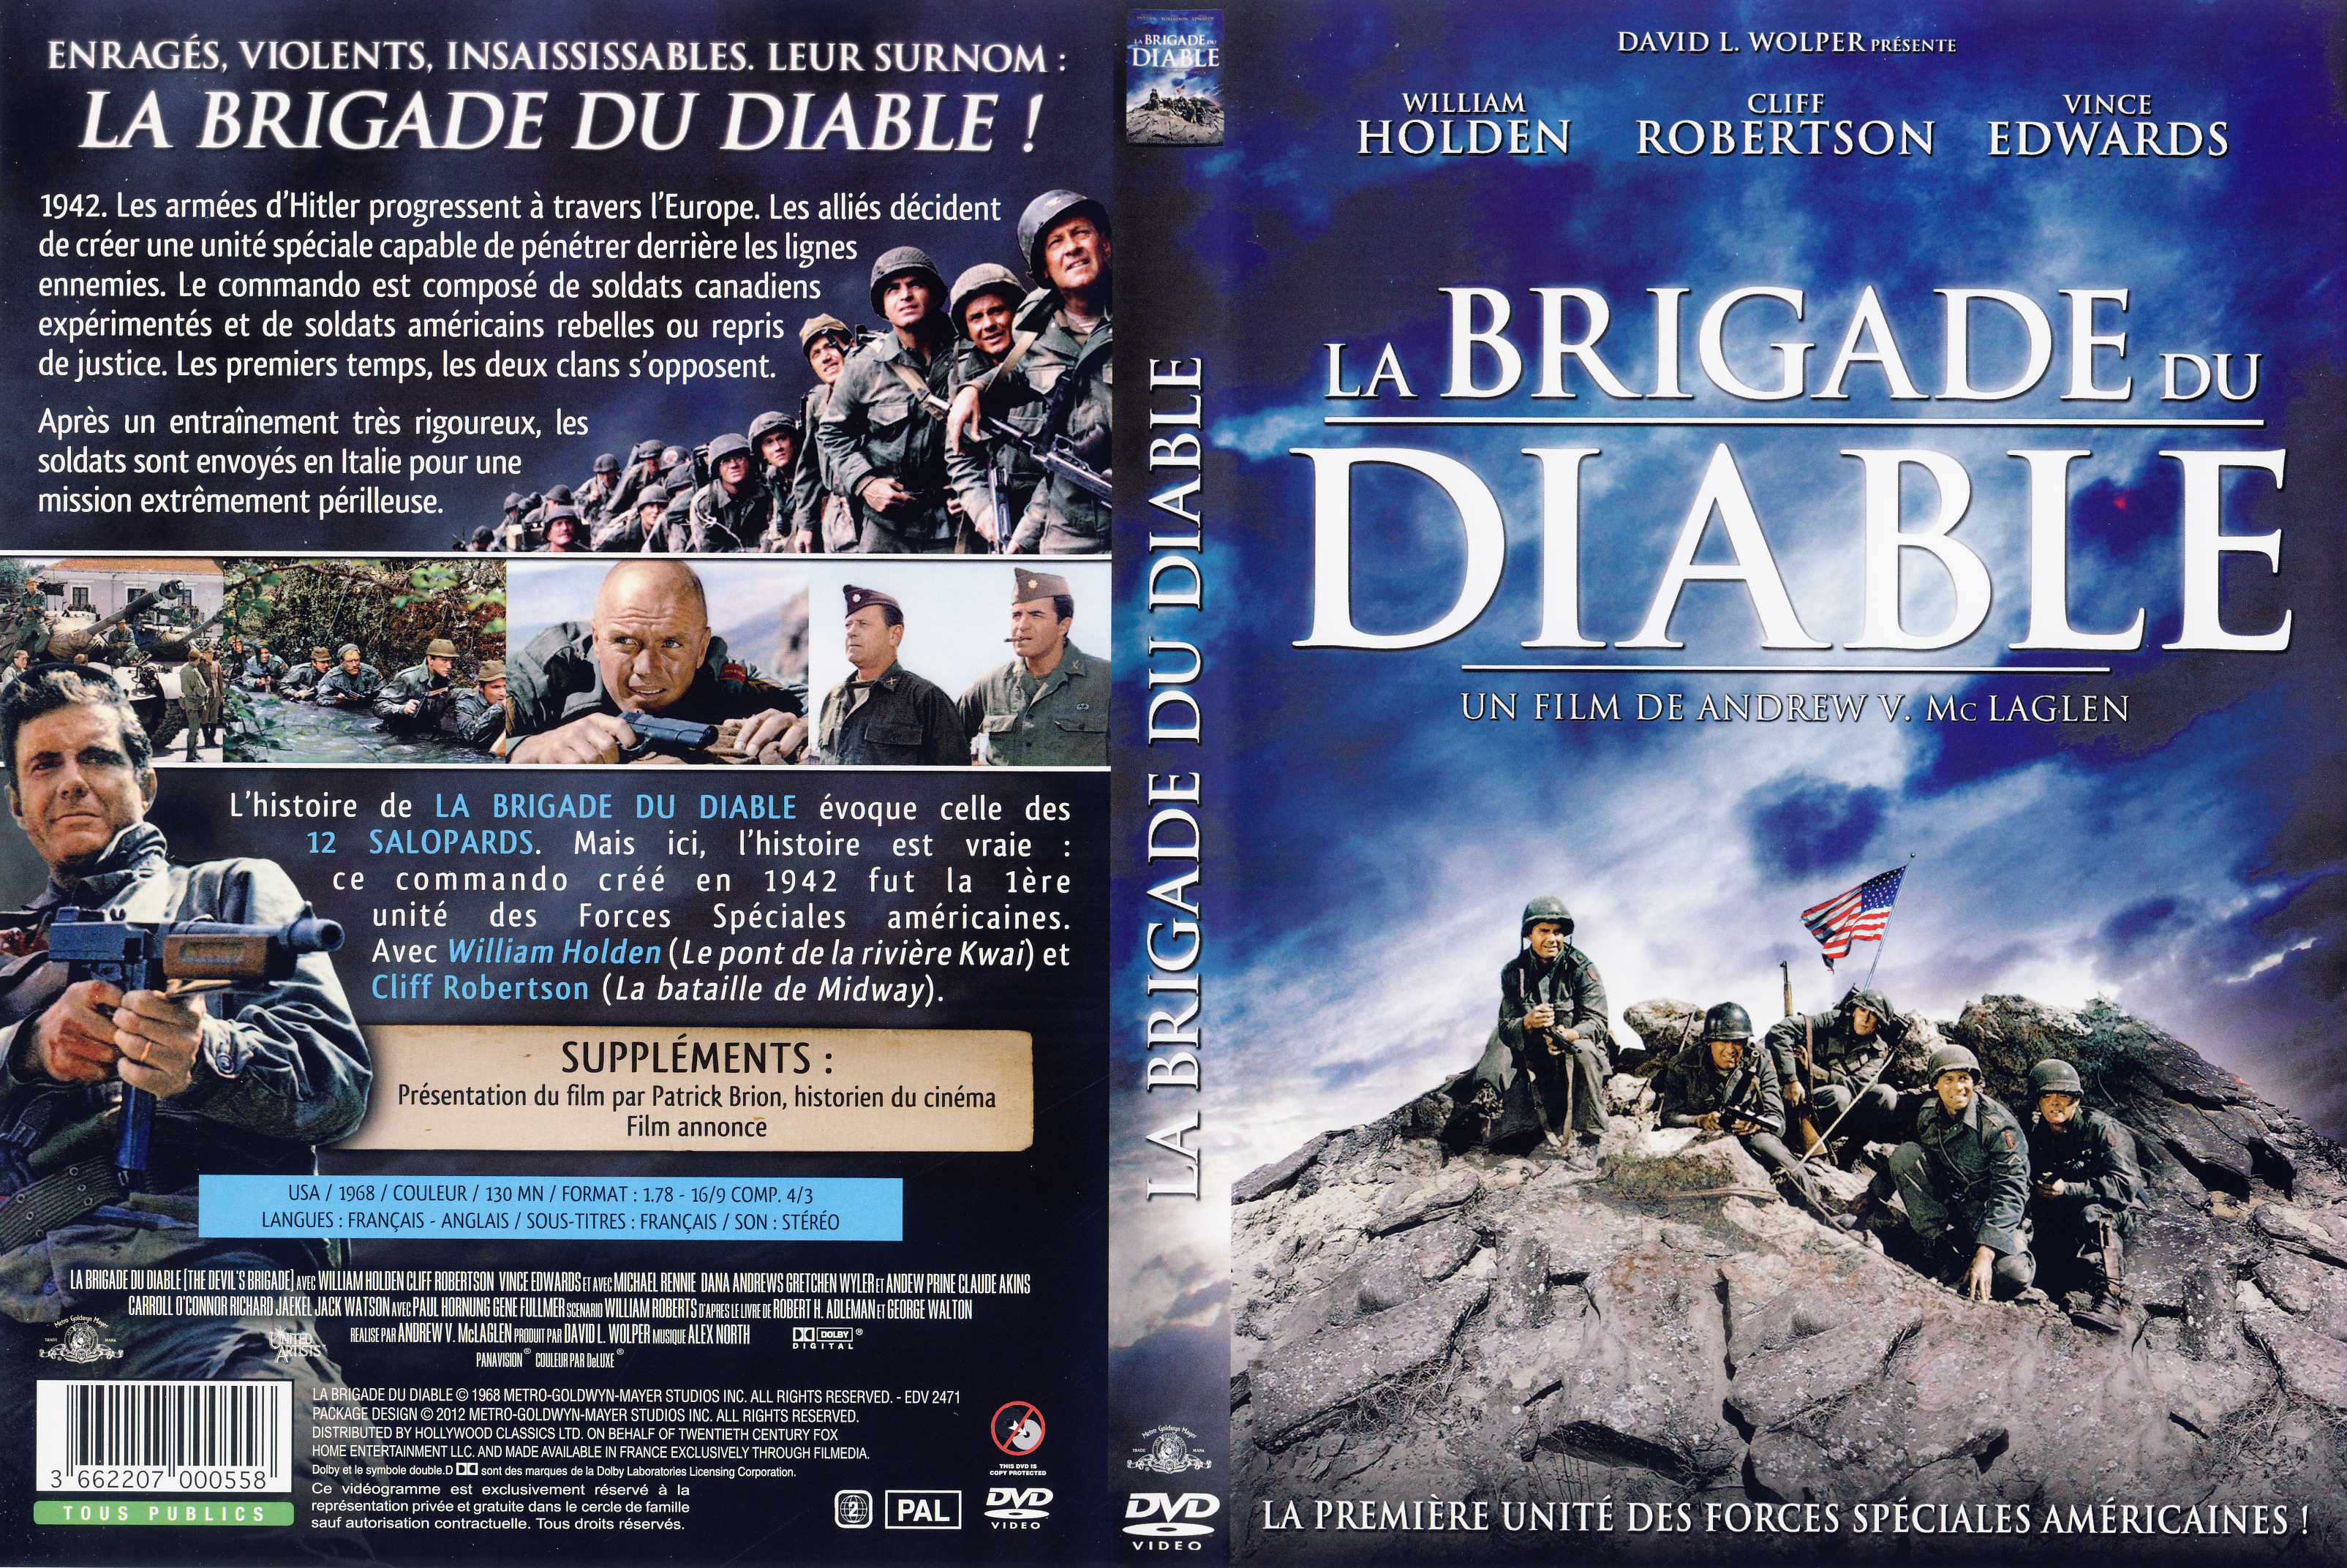 Jaquette DVD La brigade du diable v3